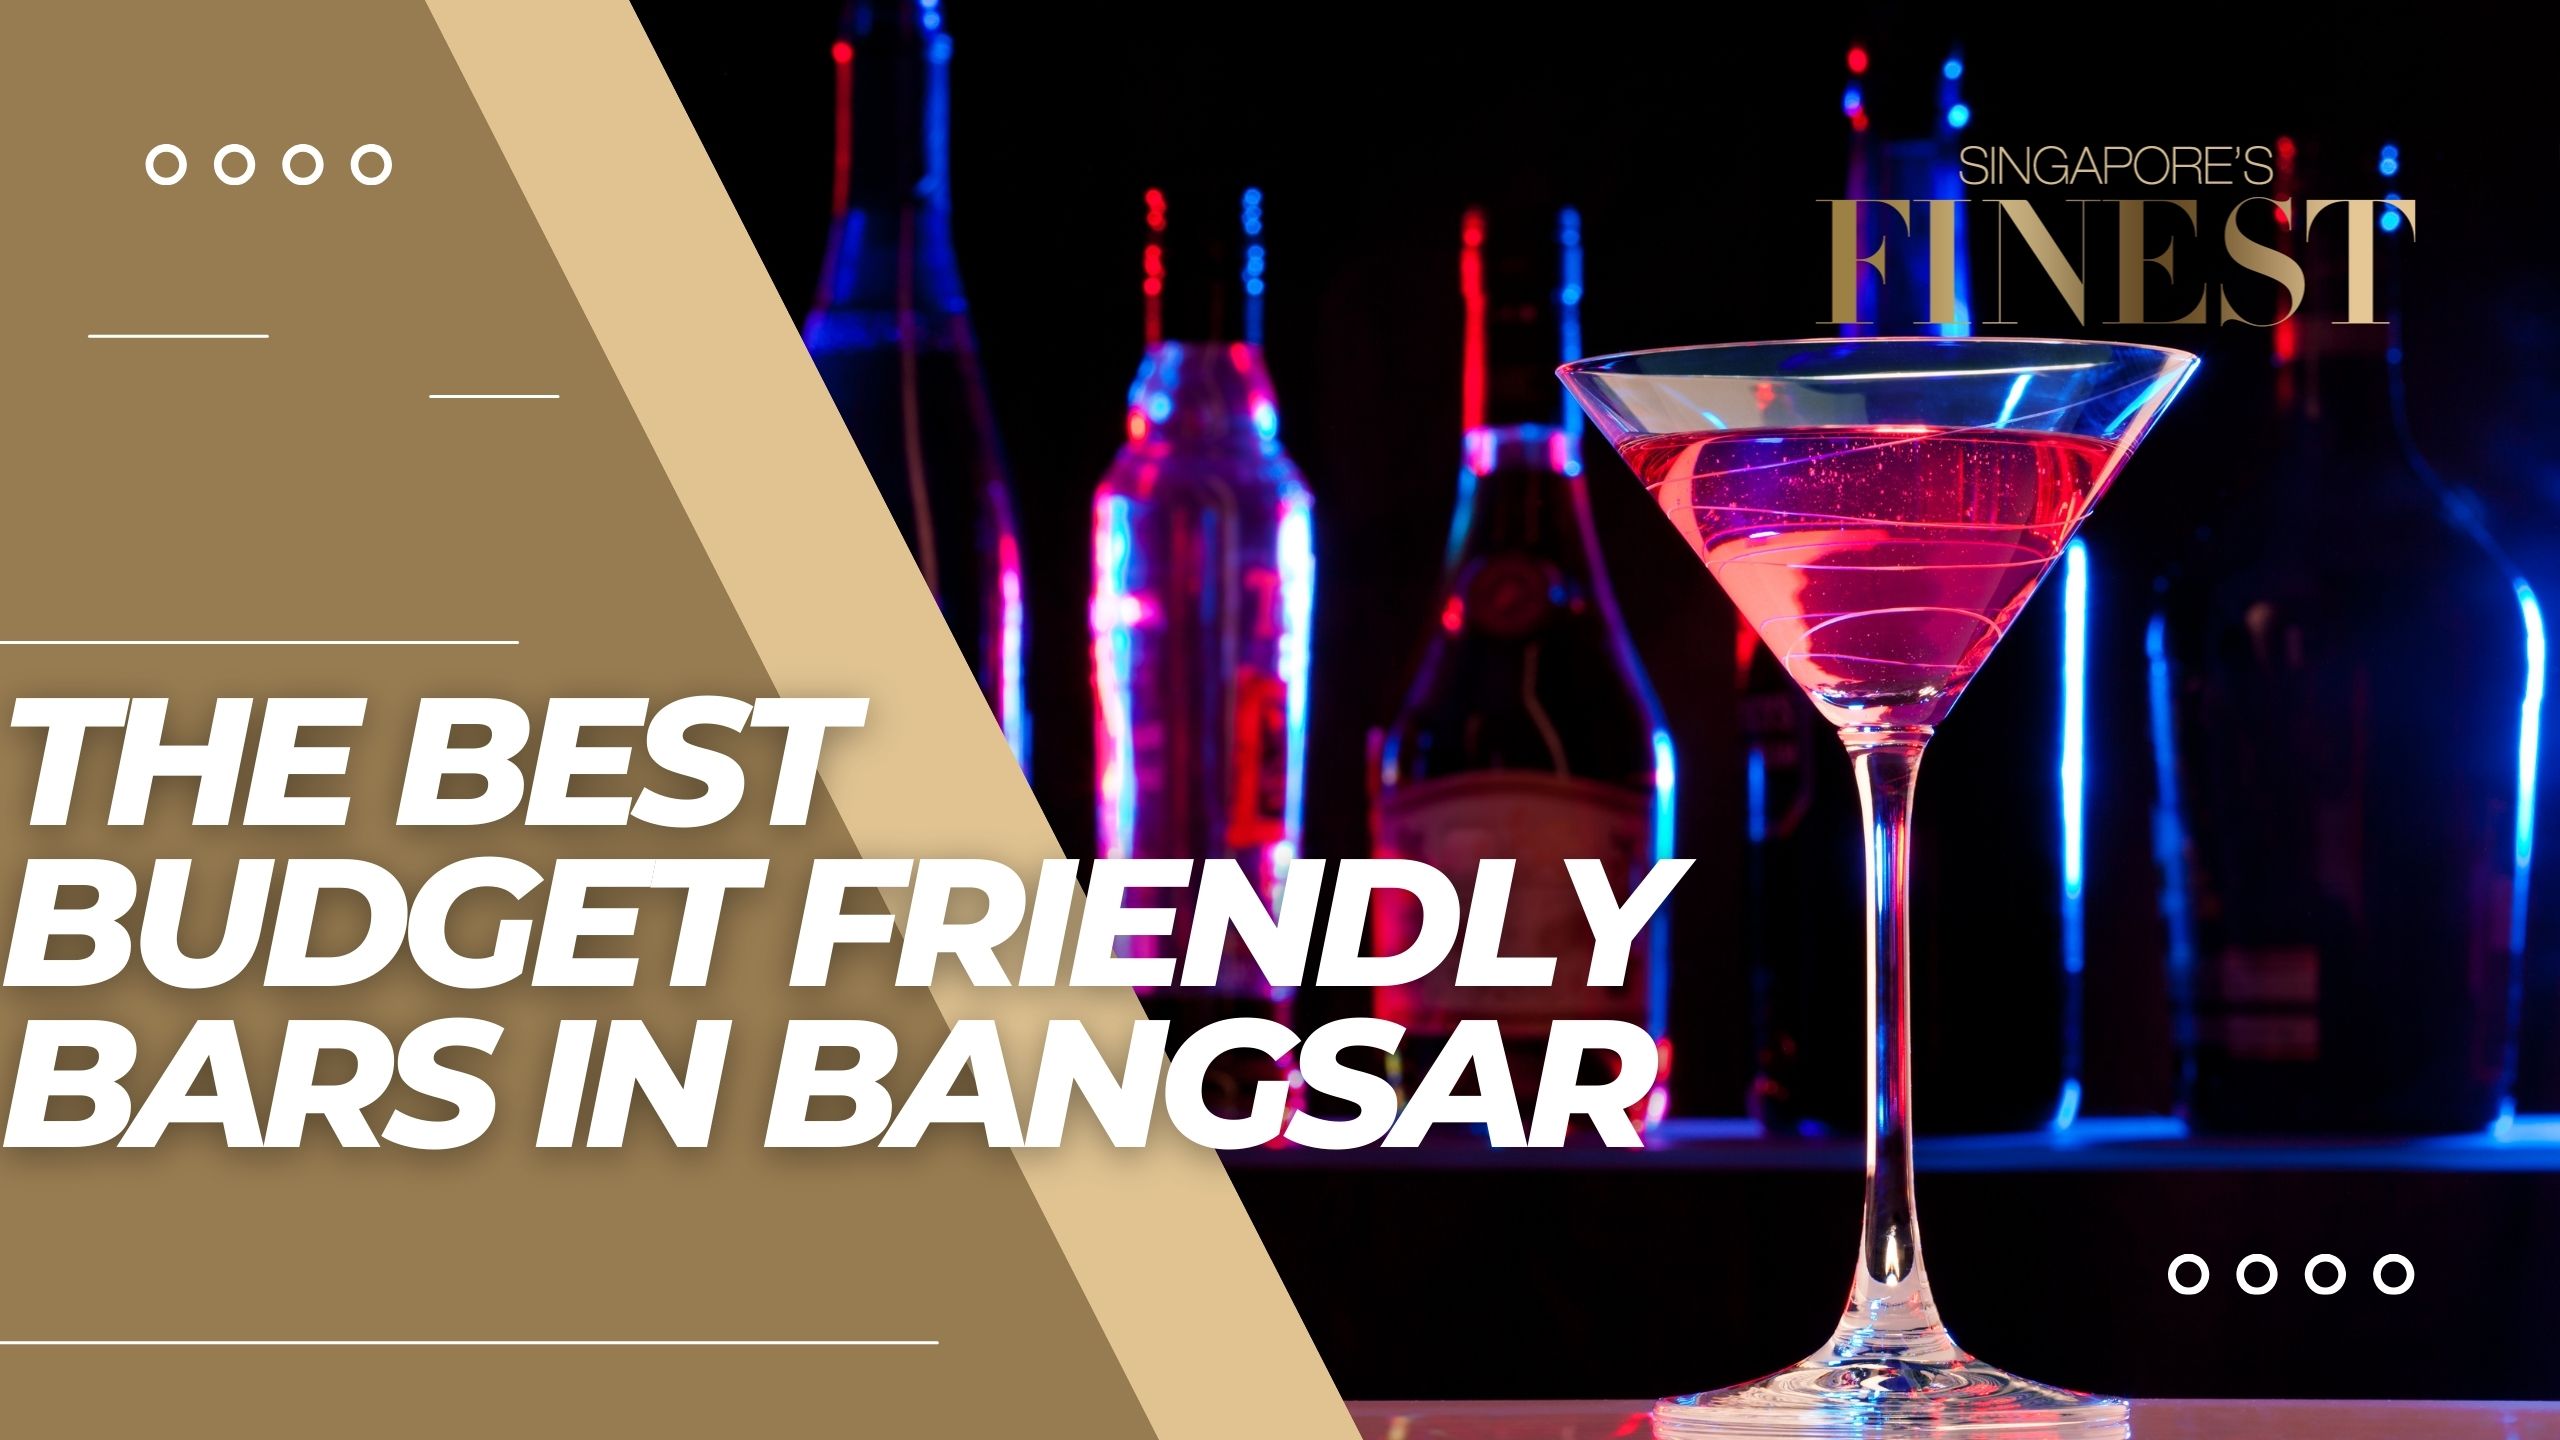 The Finest Budget Friendly Bars in Bangsar